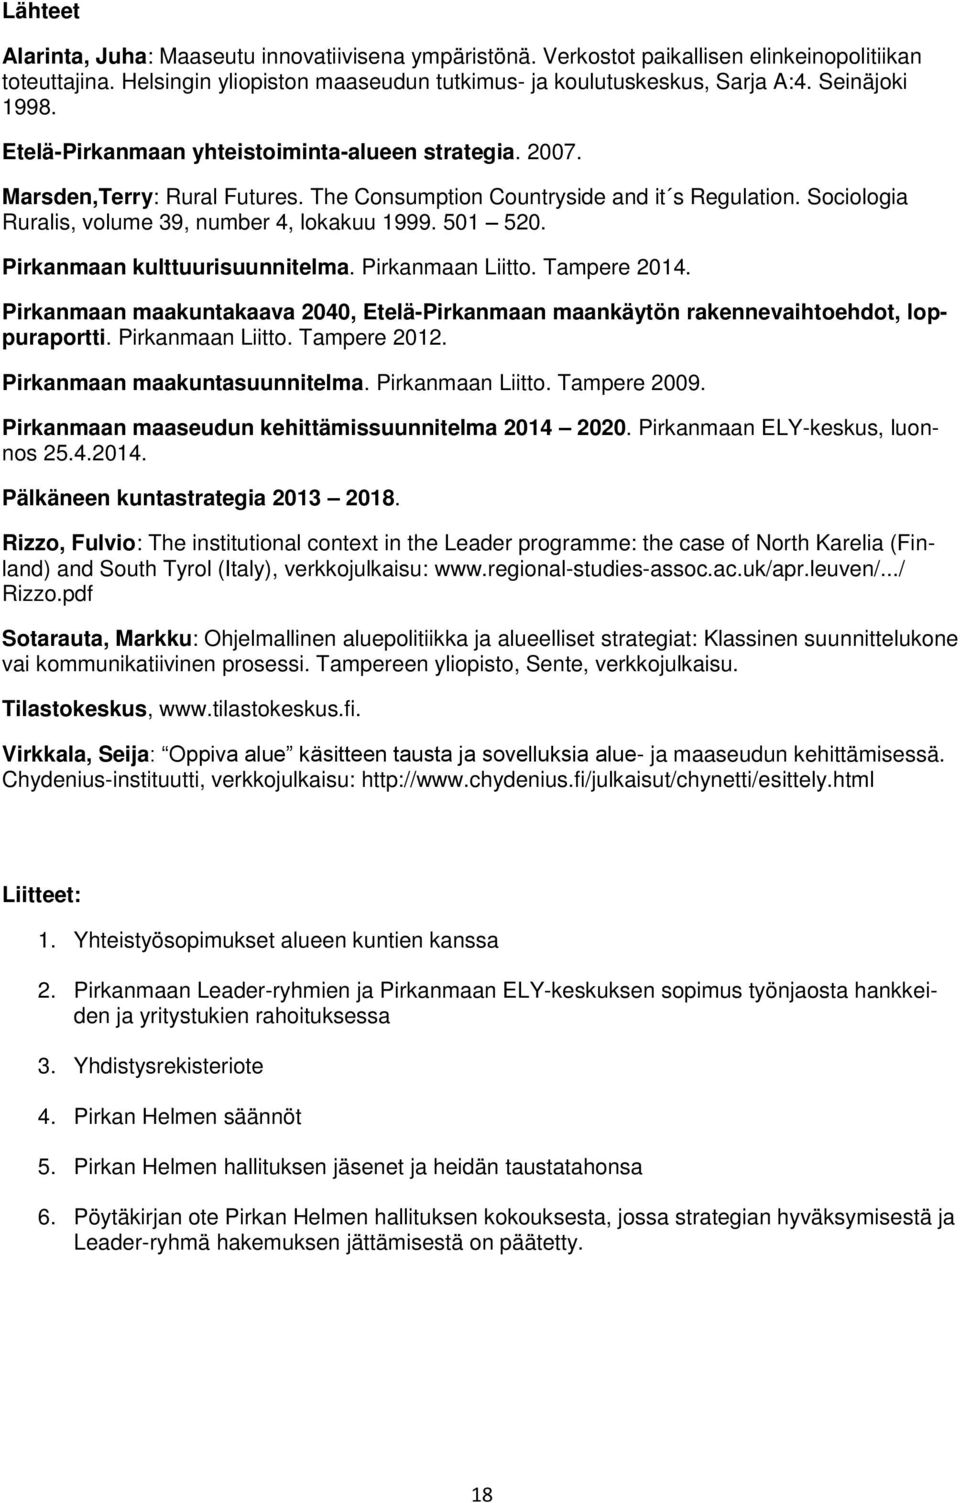 Sociologia Ruralis, volume 39, number 4, lokakuu 1999. 501 520. Pirkanmaan kulttuurisuunnitelma. Pirkanmaan Liitto. Tampere 2014.